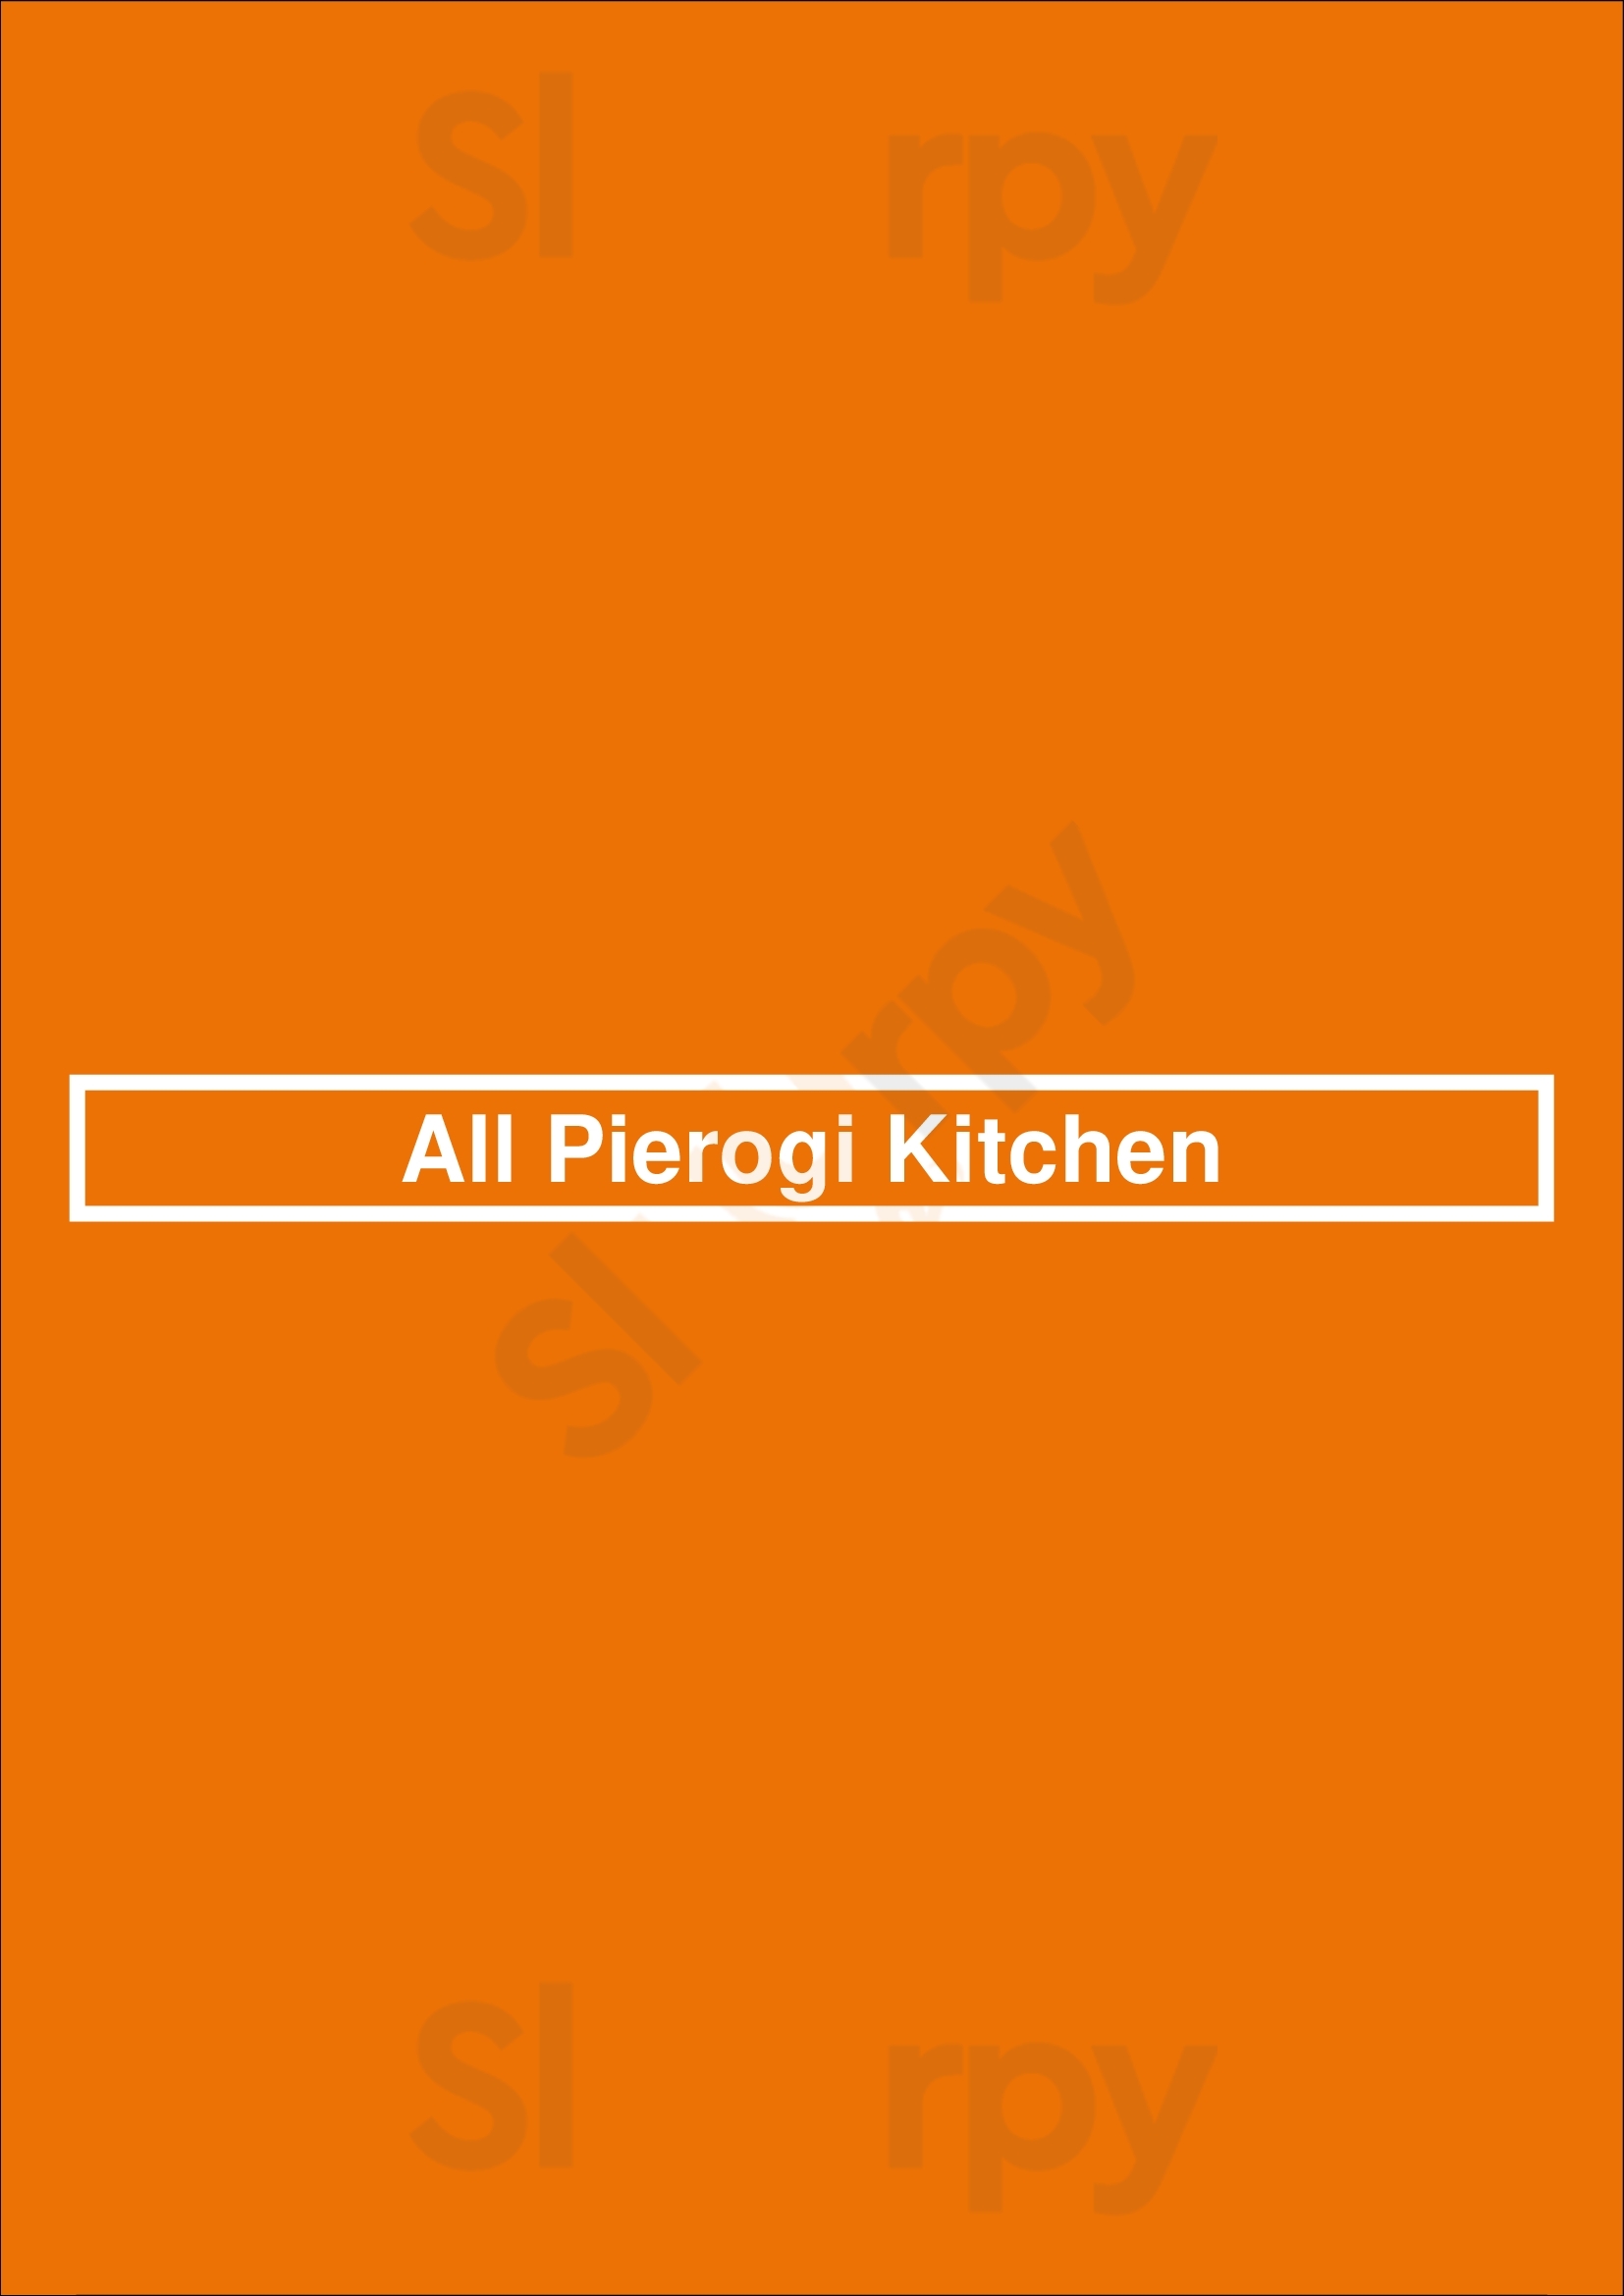 All Pierogi Kitchen Mesa Menu - 1